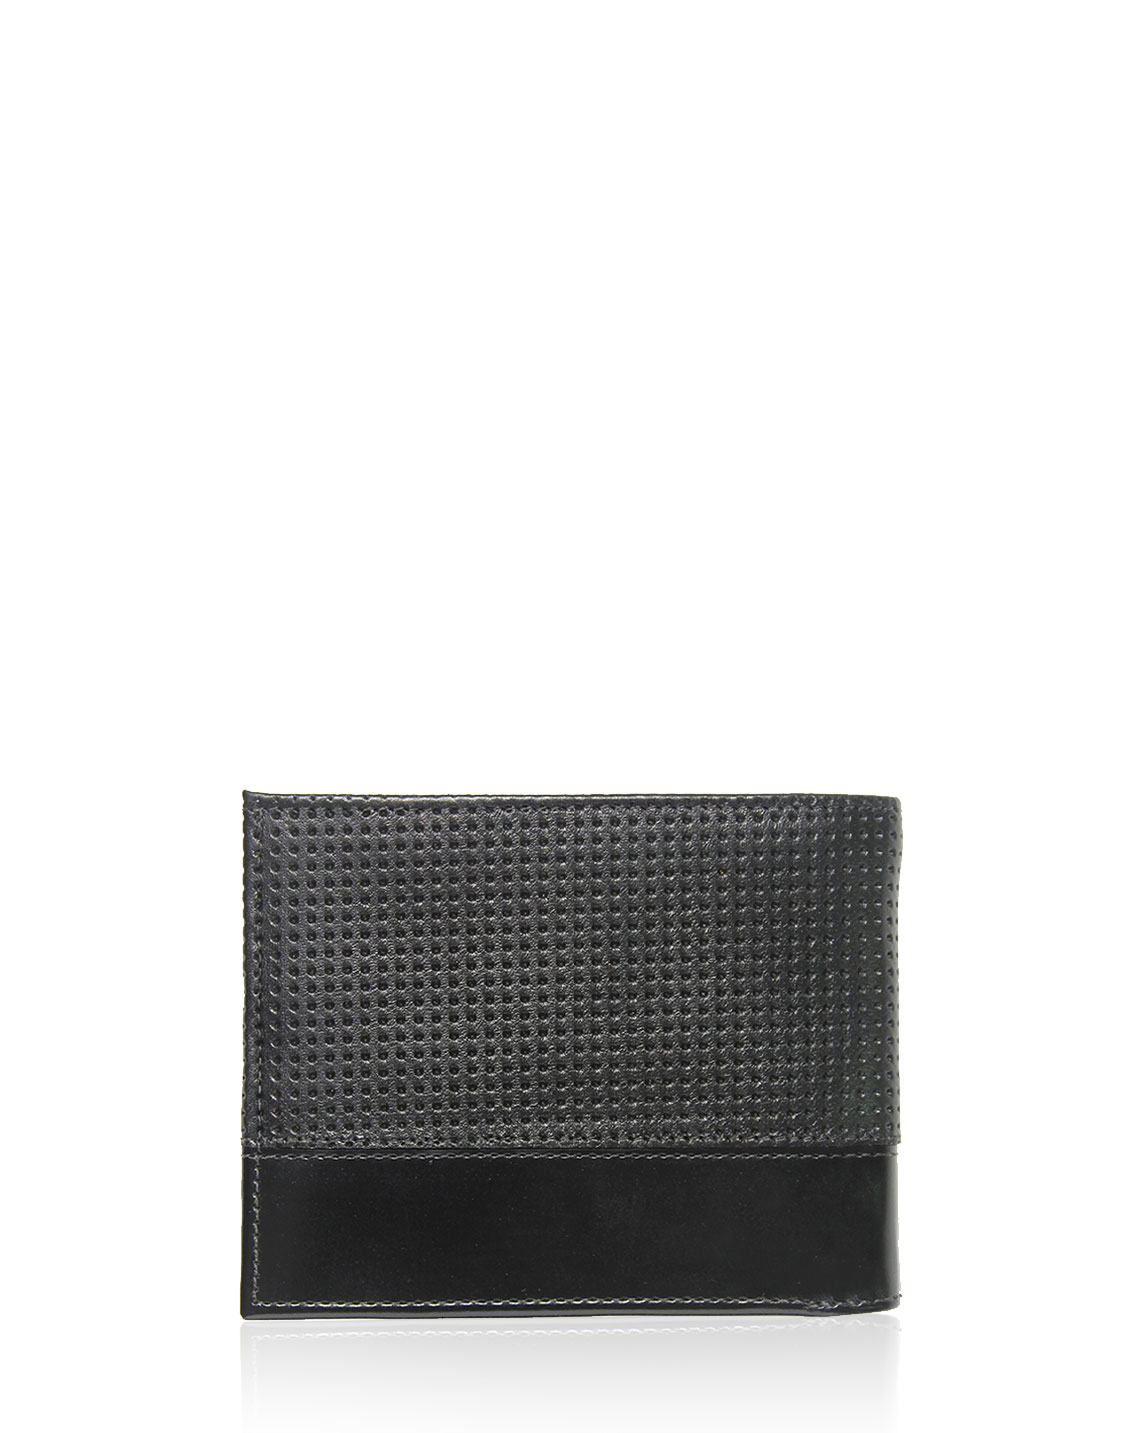 Billetera de Hombre BH-68 Color Negro